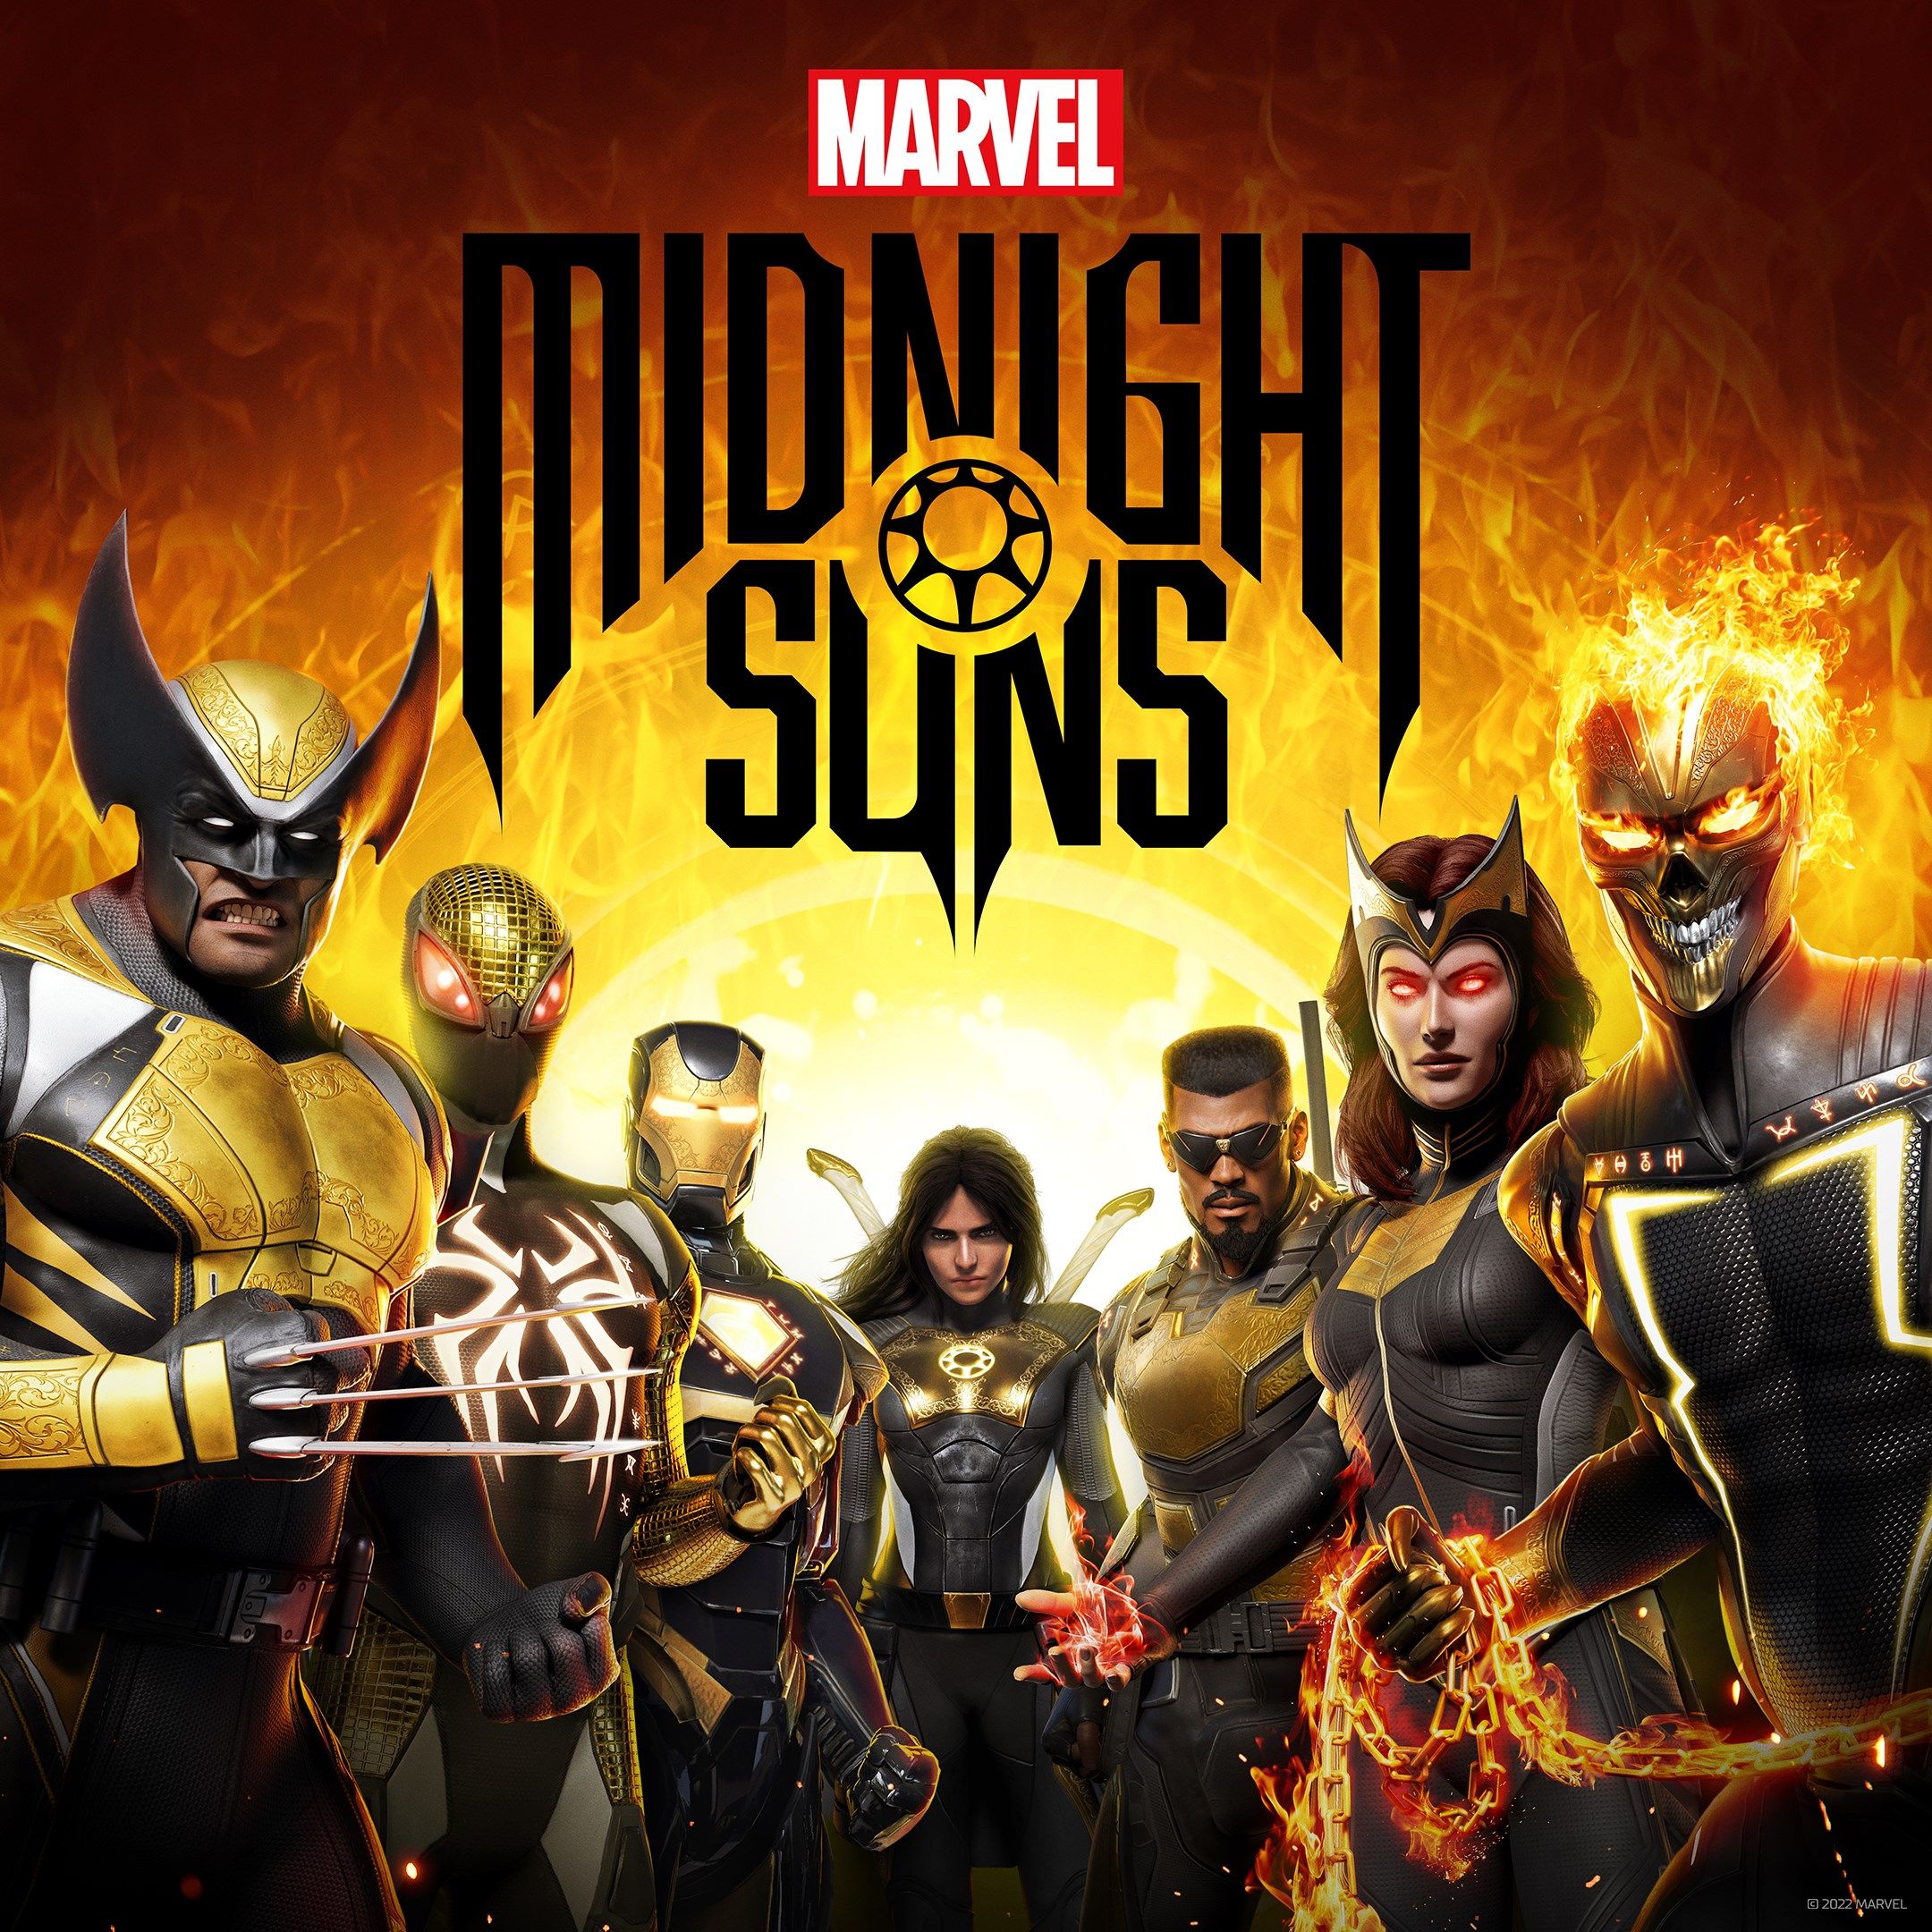 Image of Marvel's Midnight Suns